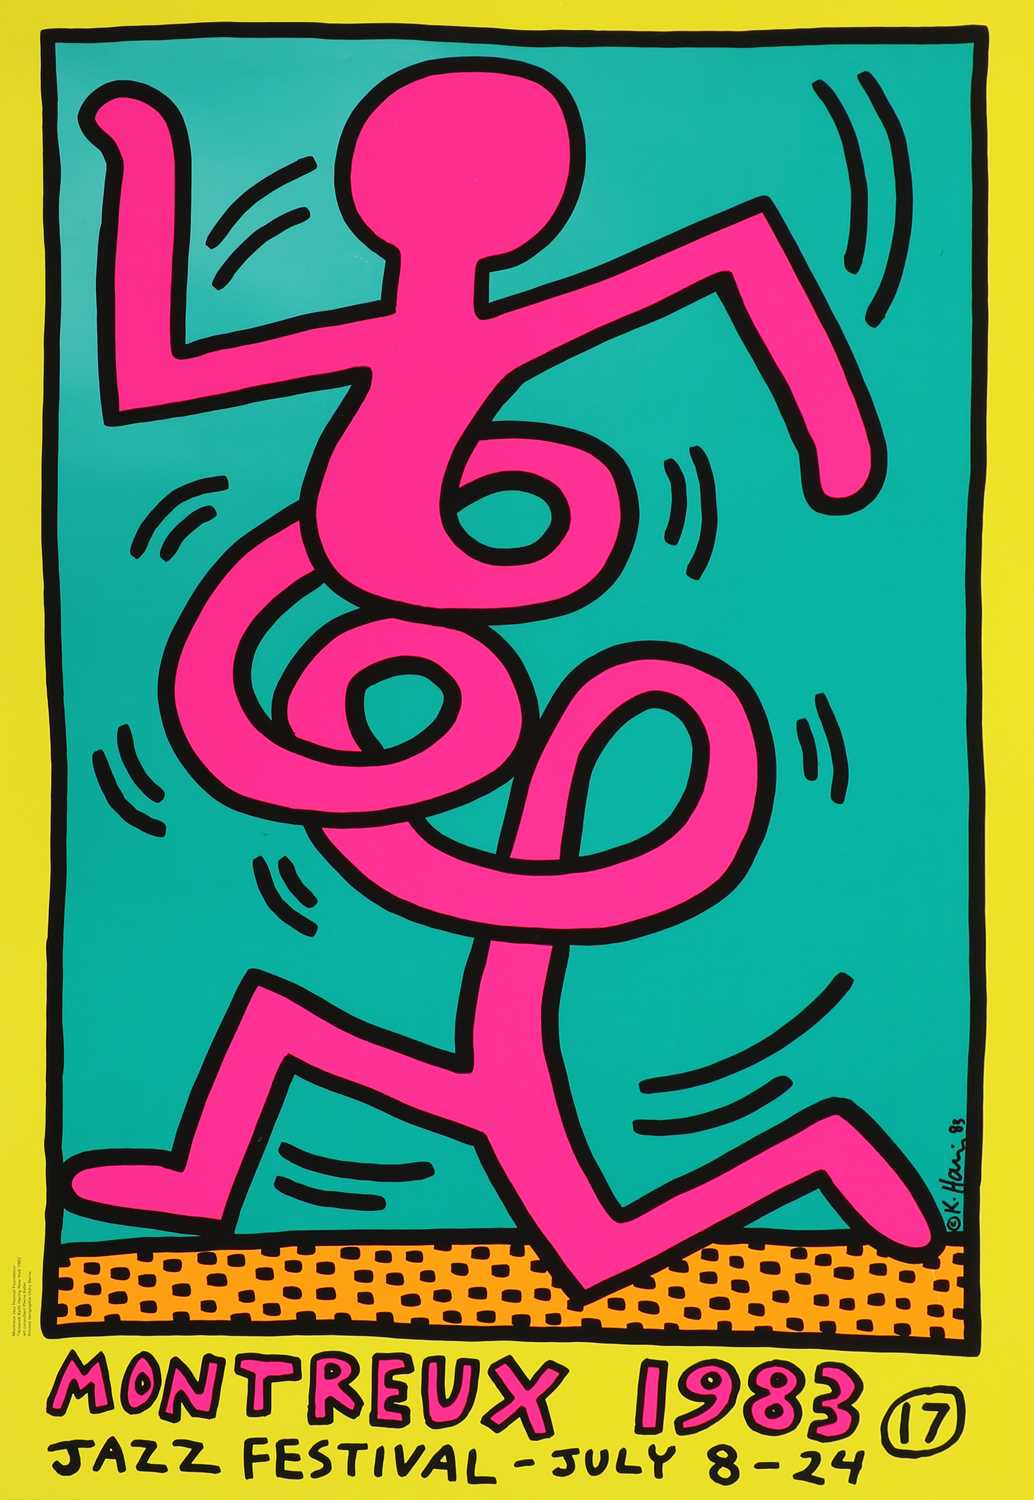 Lot 282 - Keith Haring (American, 1958-1990)